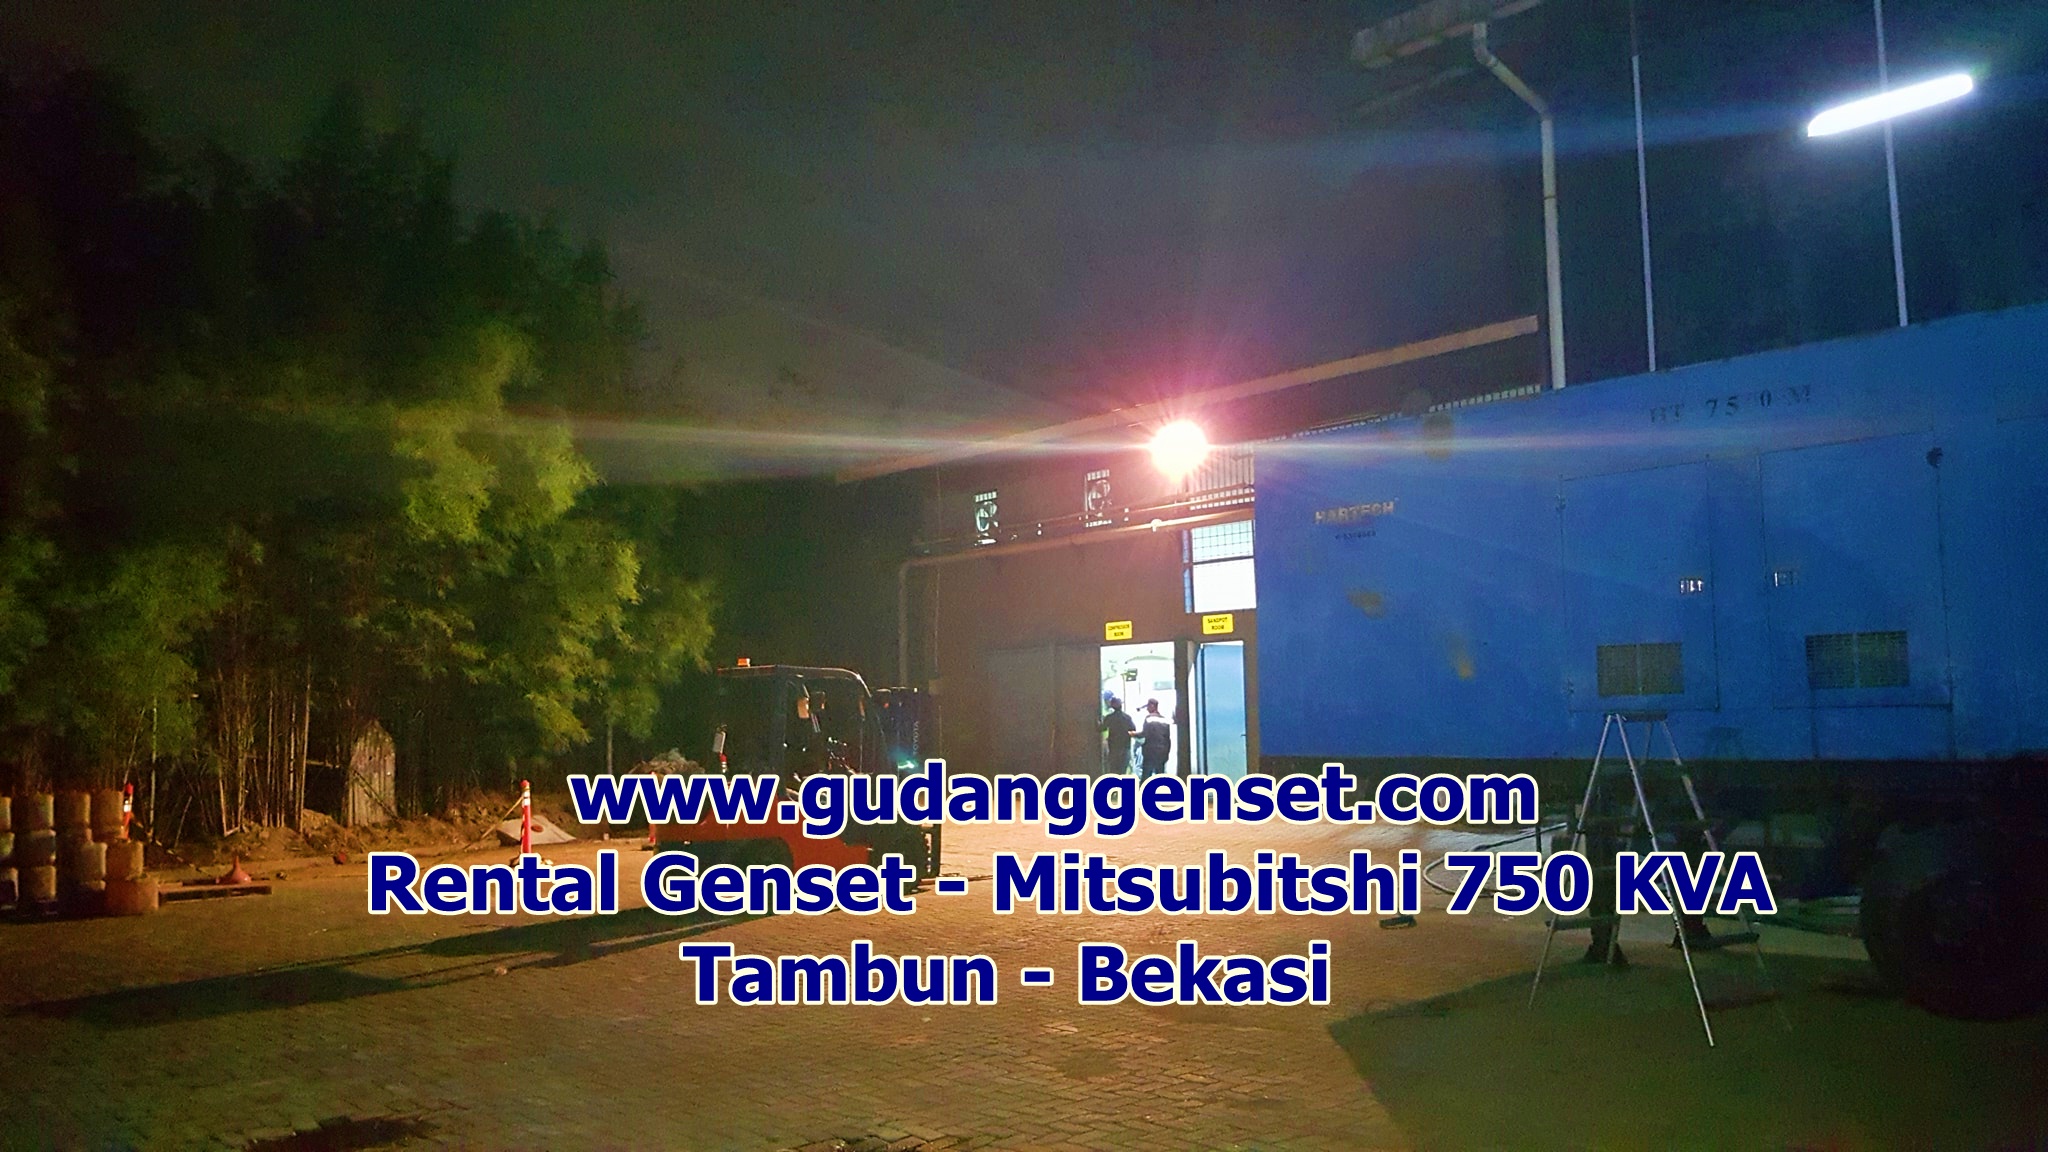 Rental Genset - Gudang Genset 081287796055